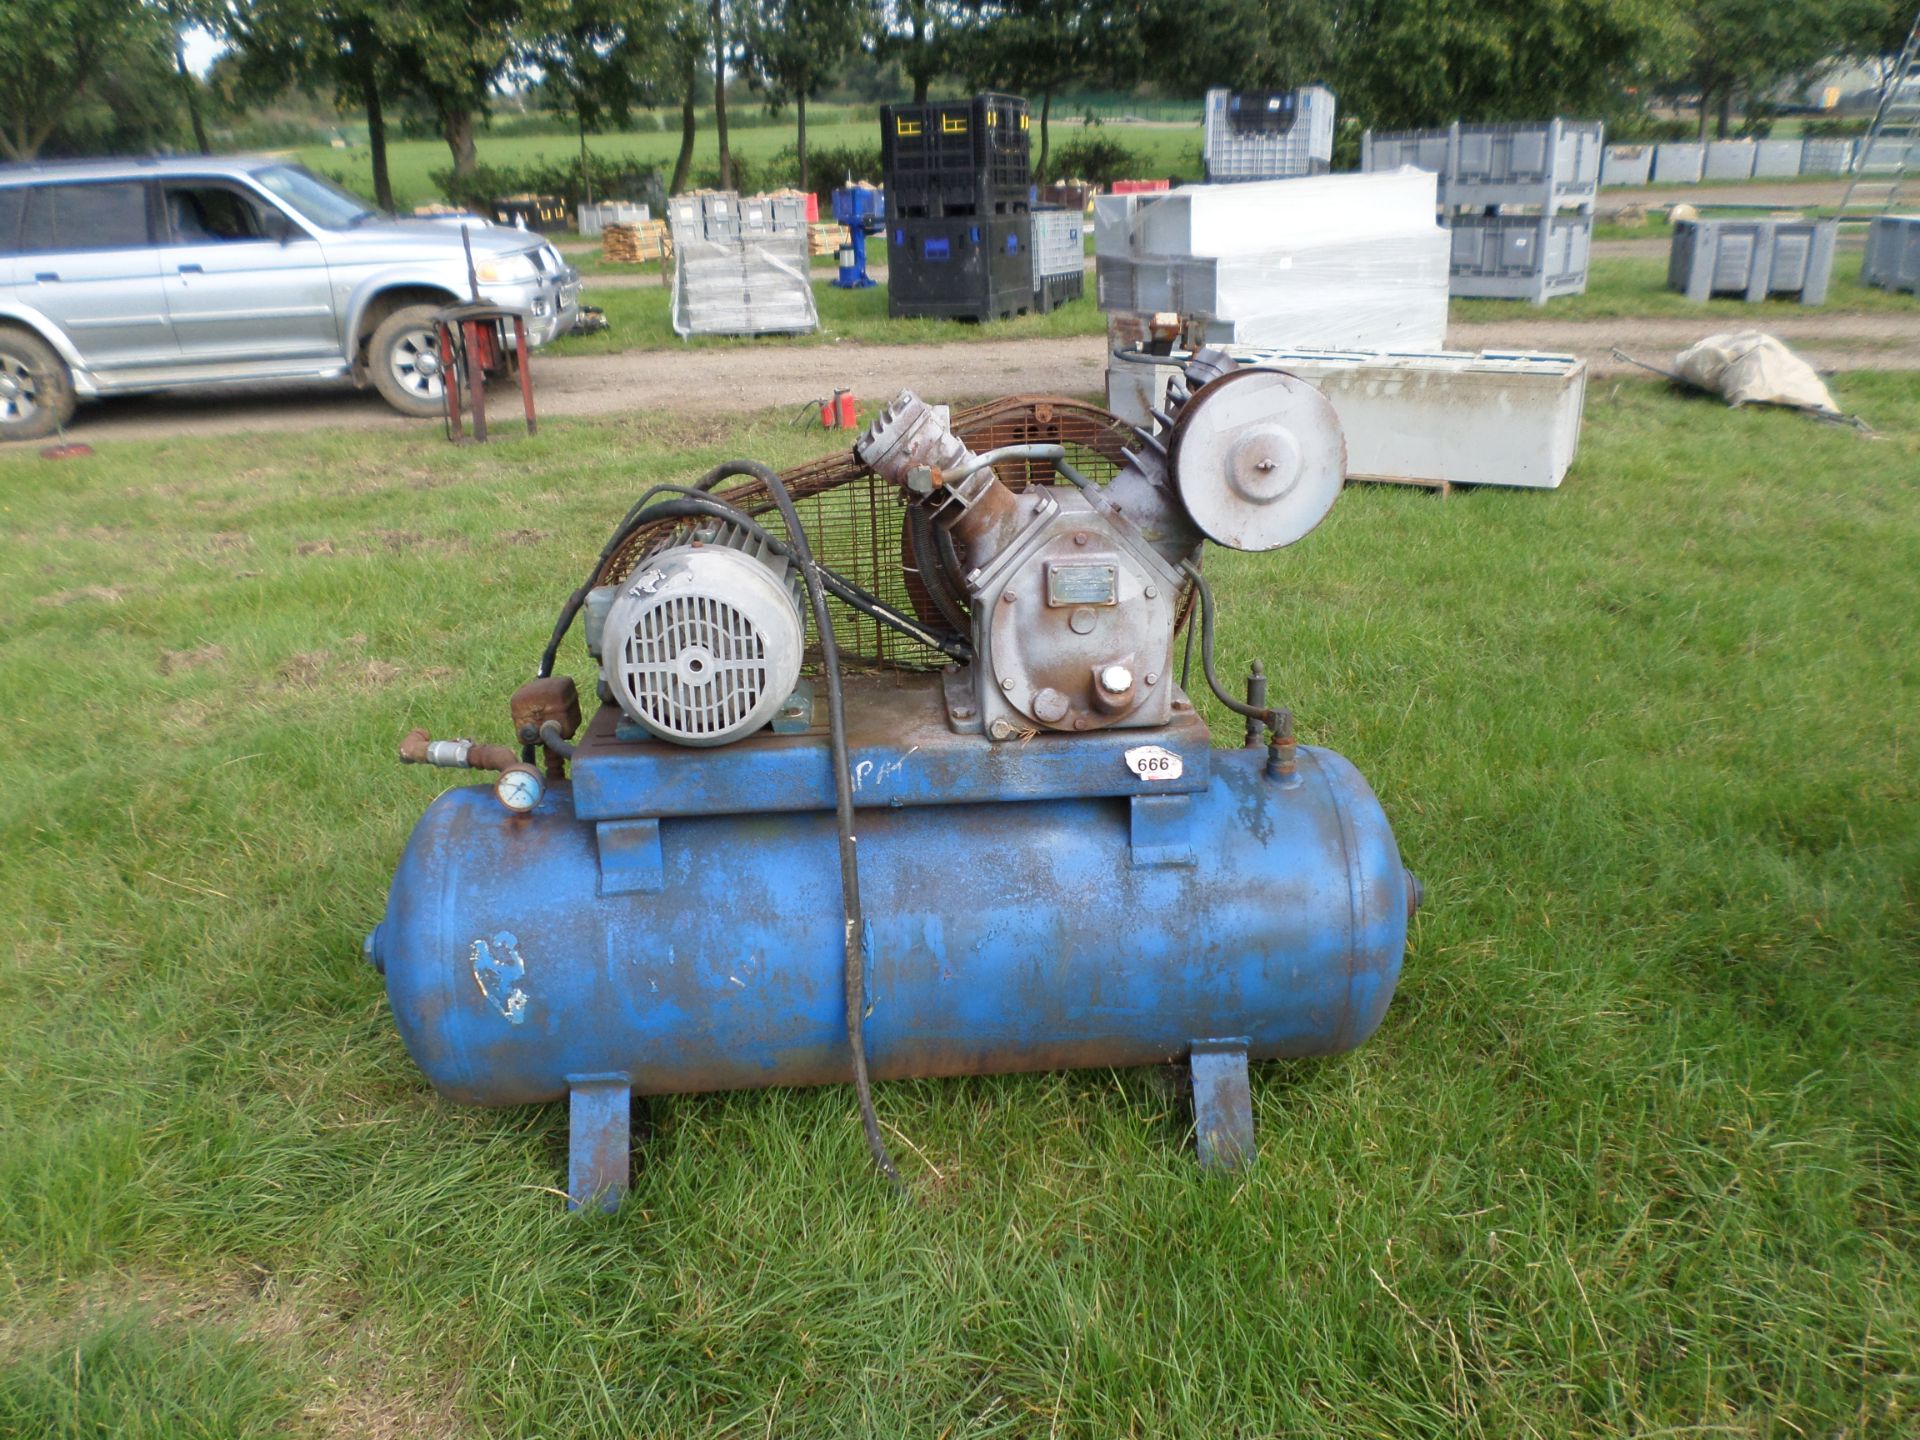 Ingersoll Rand 240v industrial air compressor